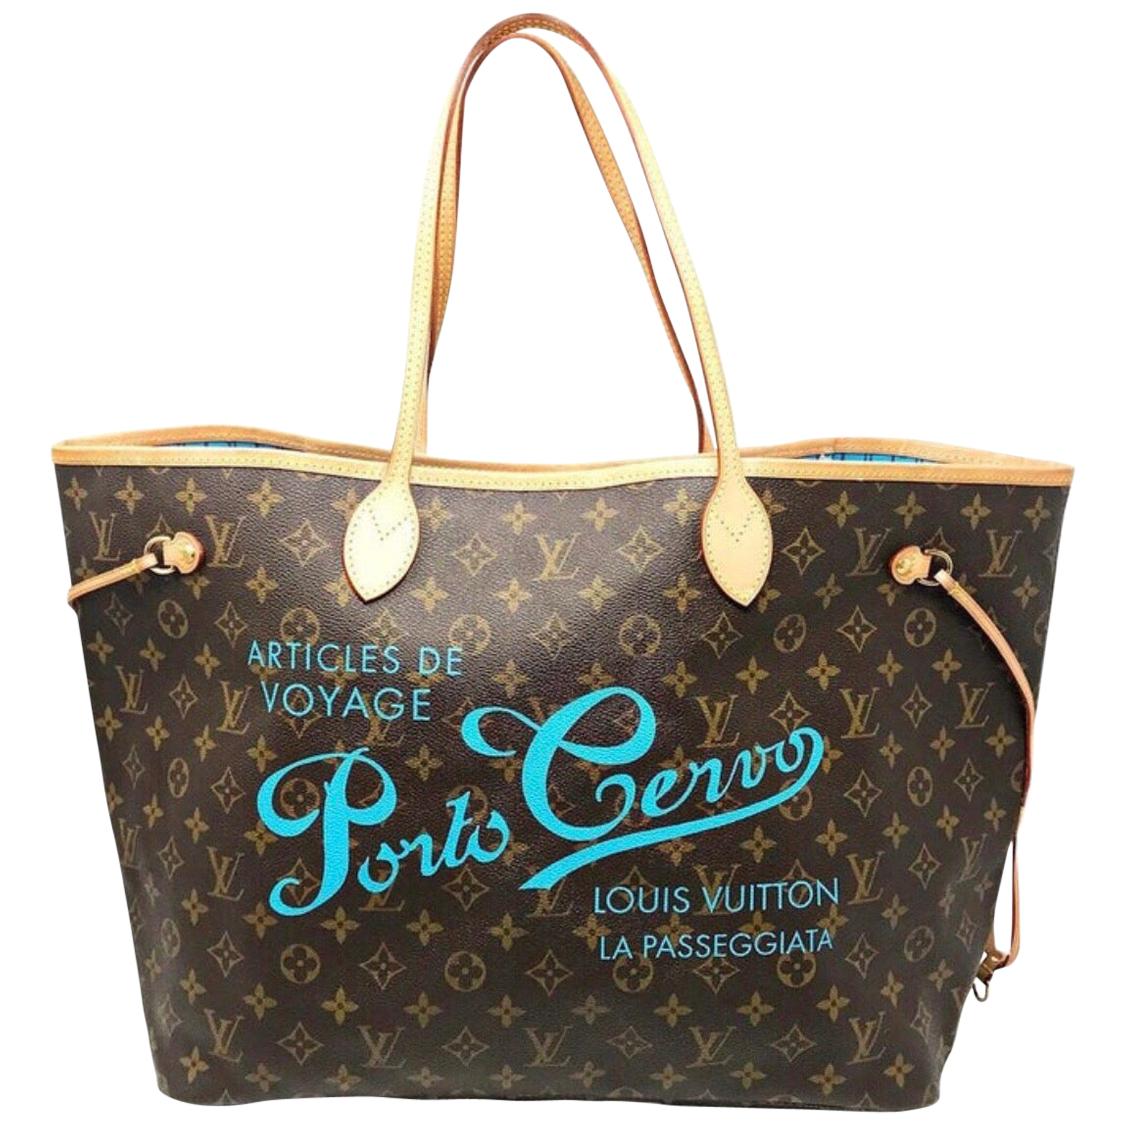 Louis Vuitton NEVERFULL MM PORTO CERVO Summer Trunks Damier Azur Bag Tote  NEW